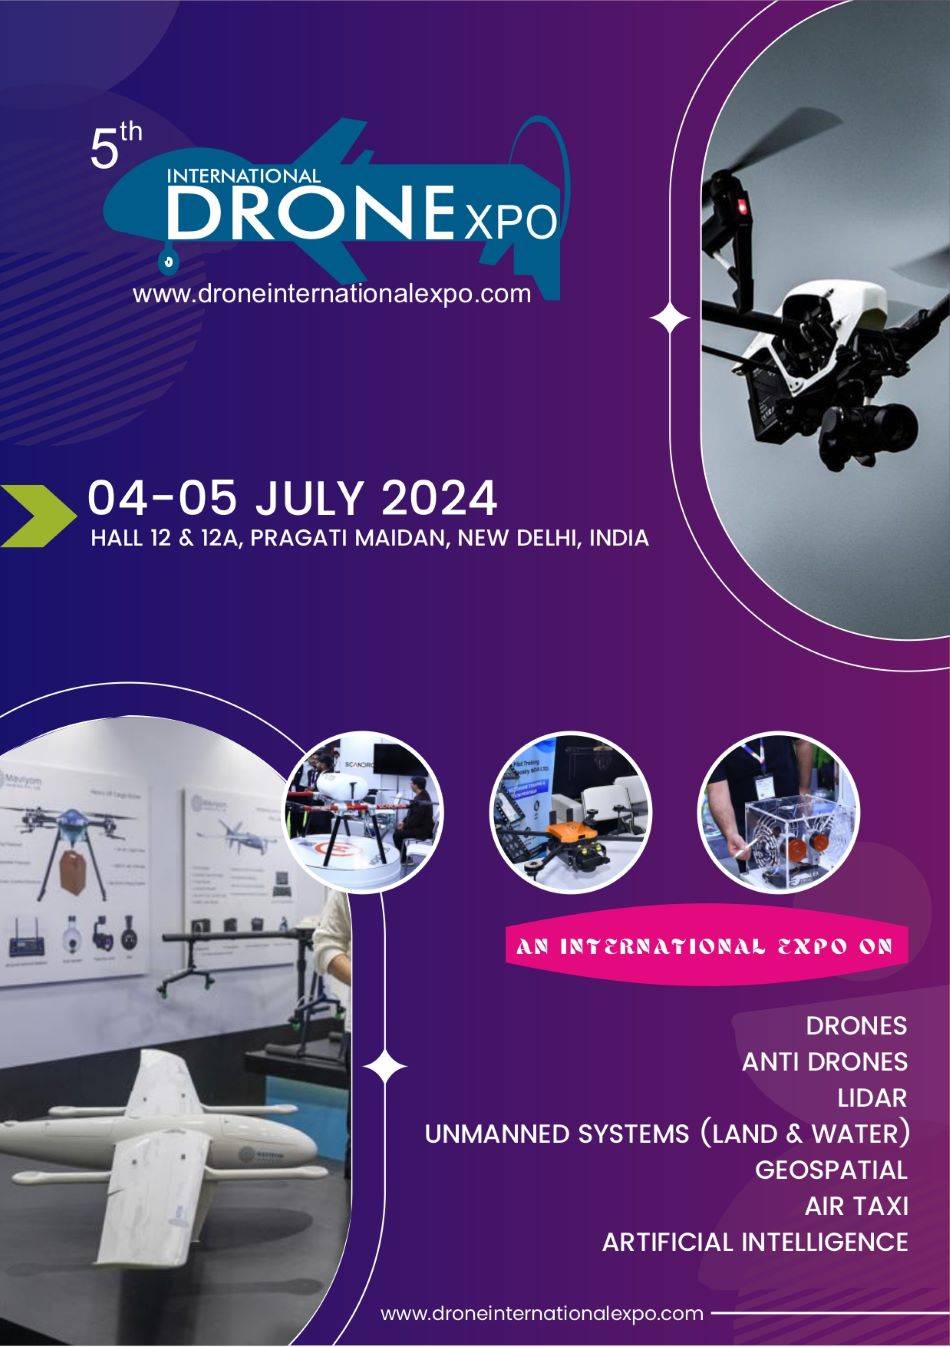 5th International DronExpo